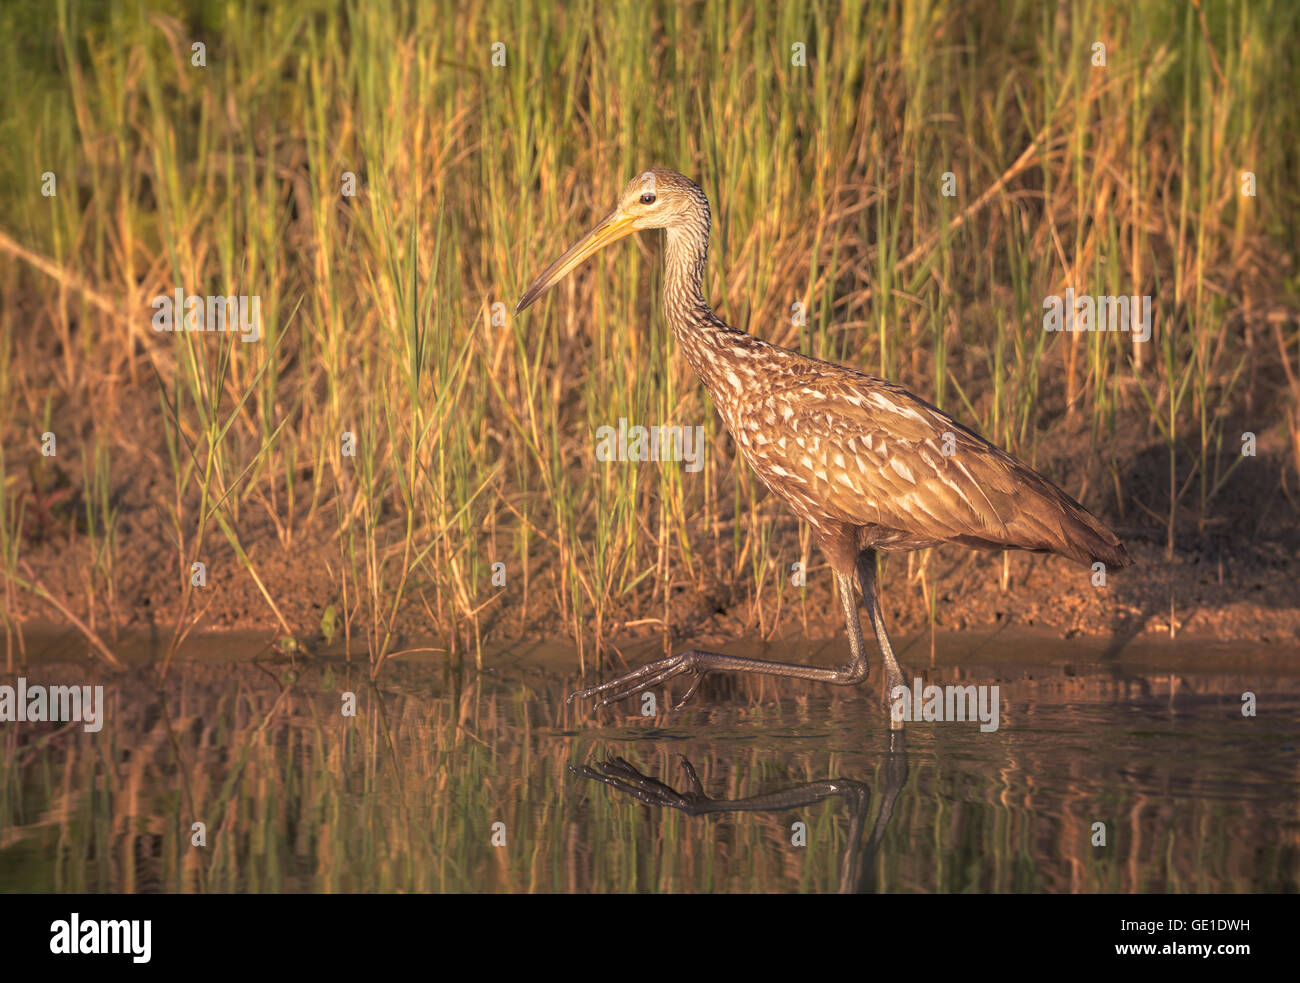 Limpkin bird (Aramus guarauna) wading in shallow water, Florida, United States Stock Photo